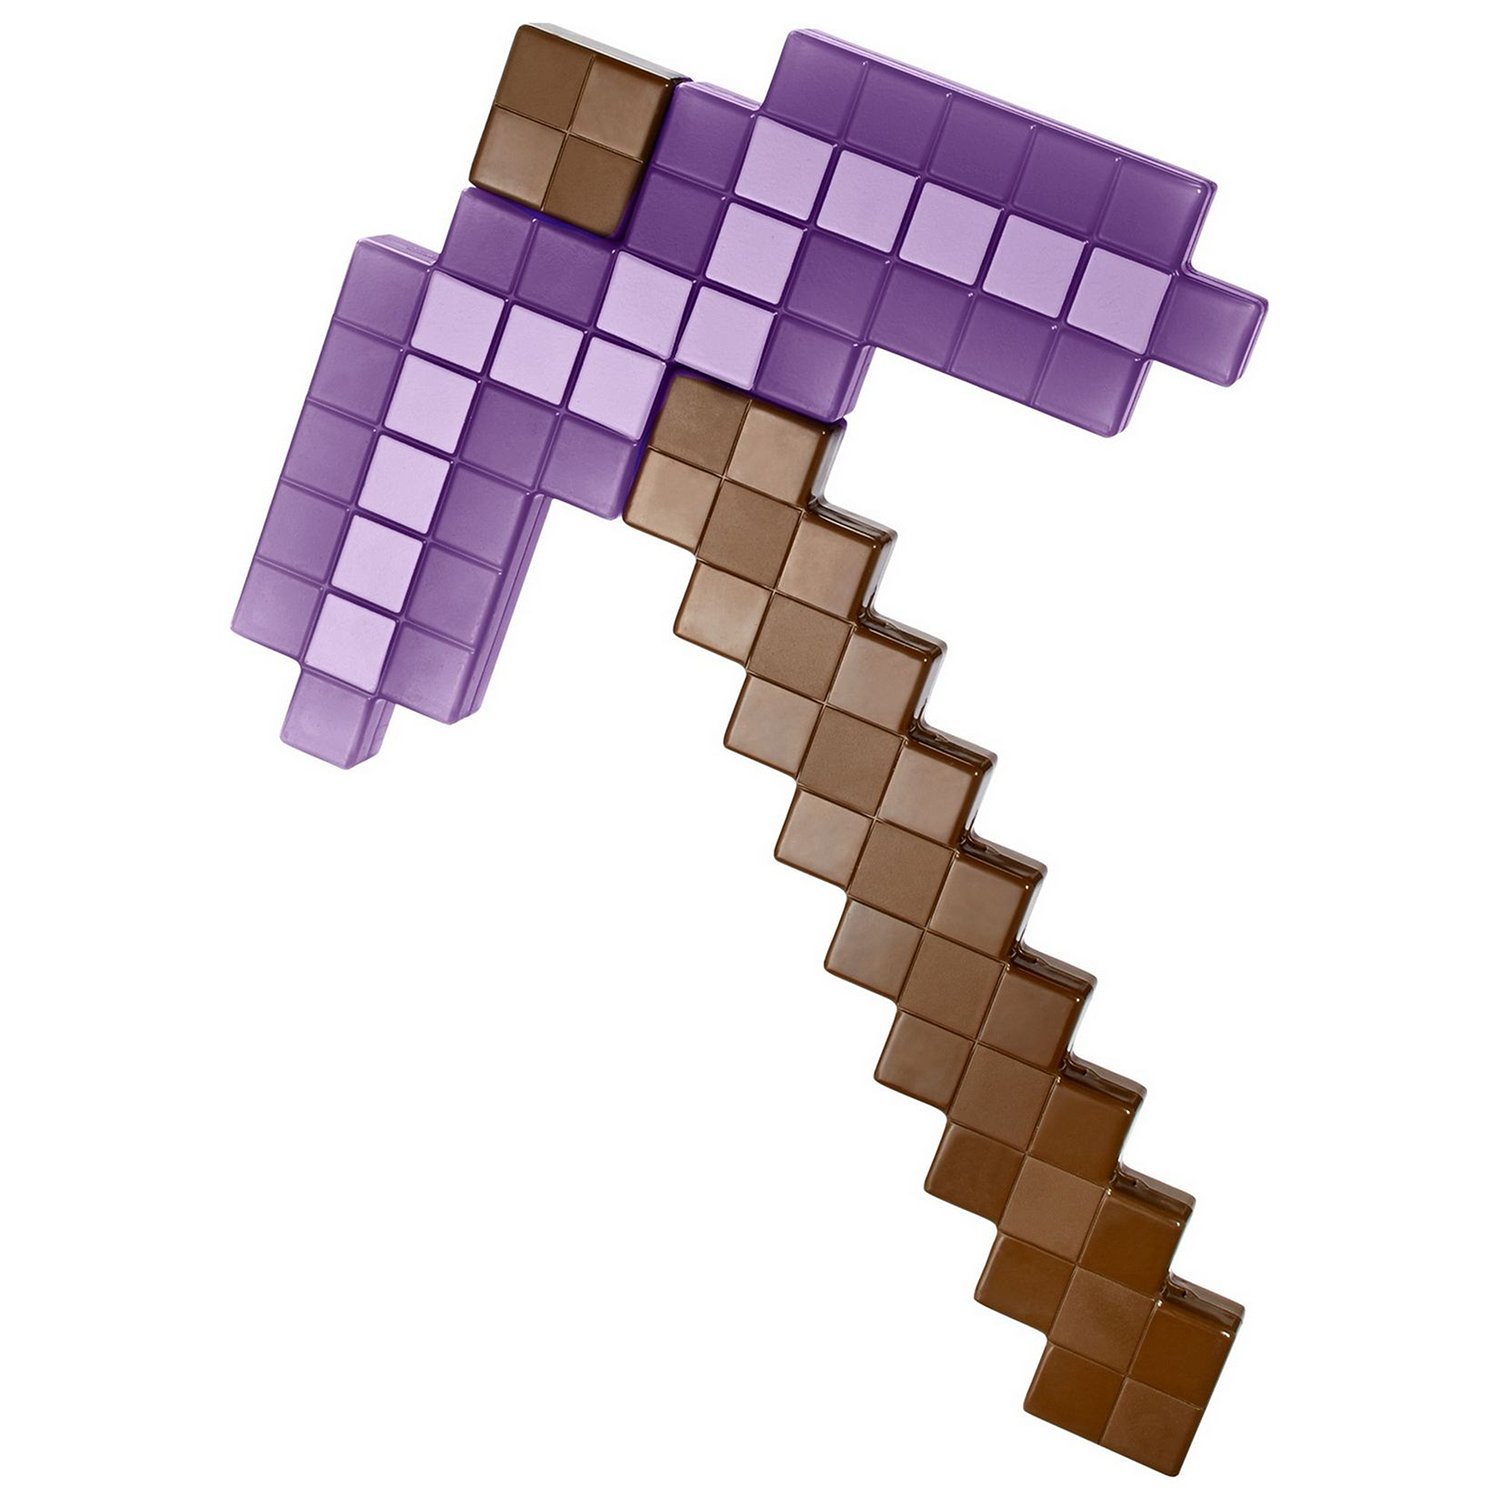 Minecraft Pickaxe Enchanted